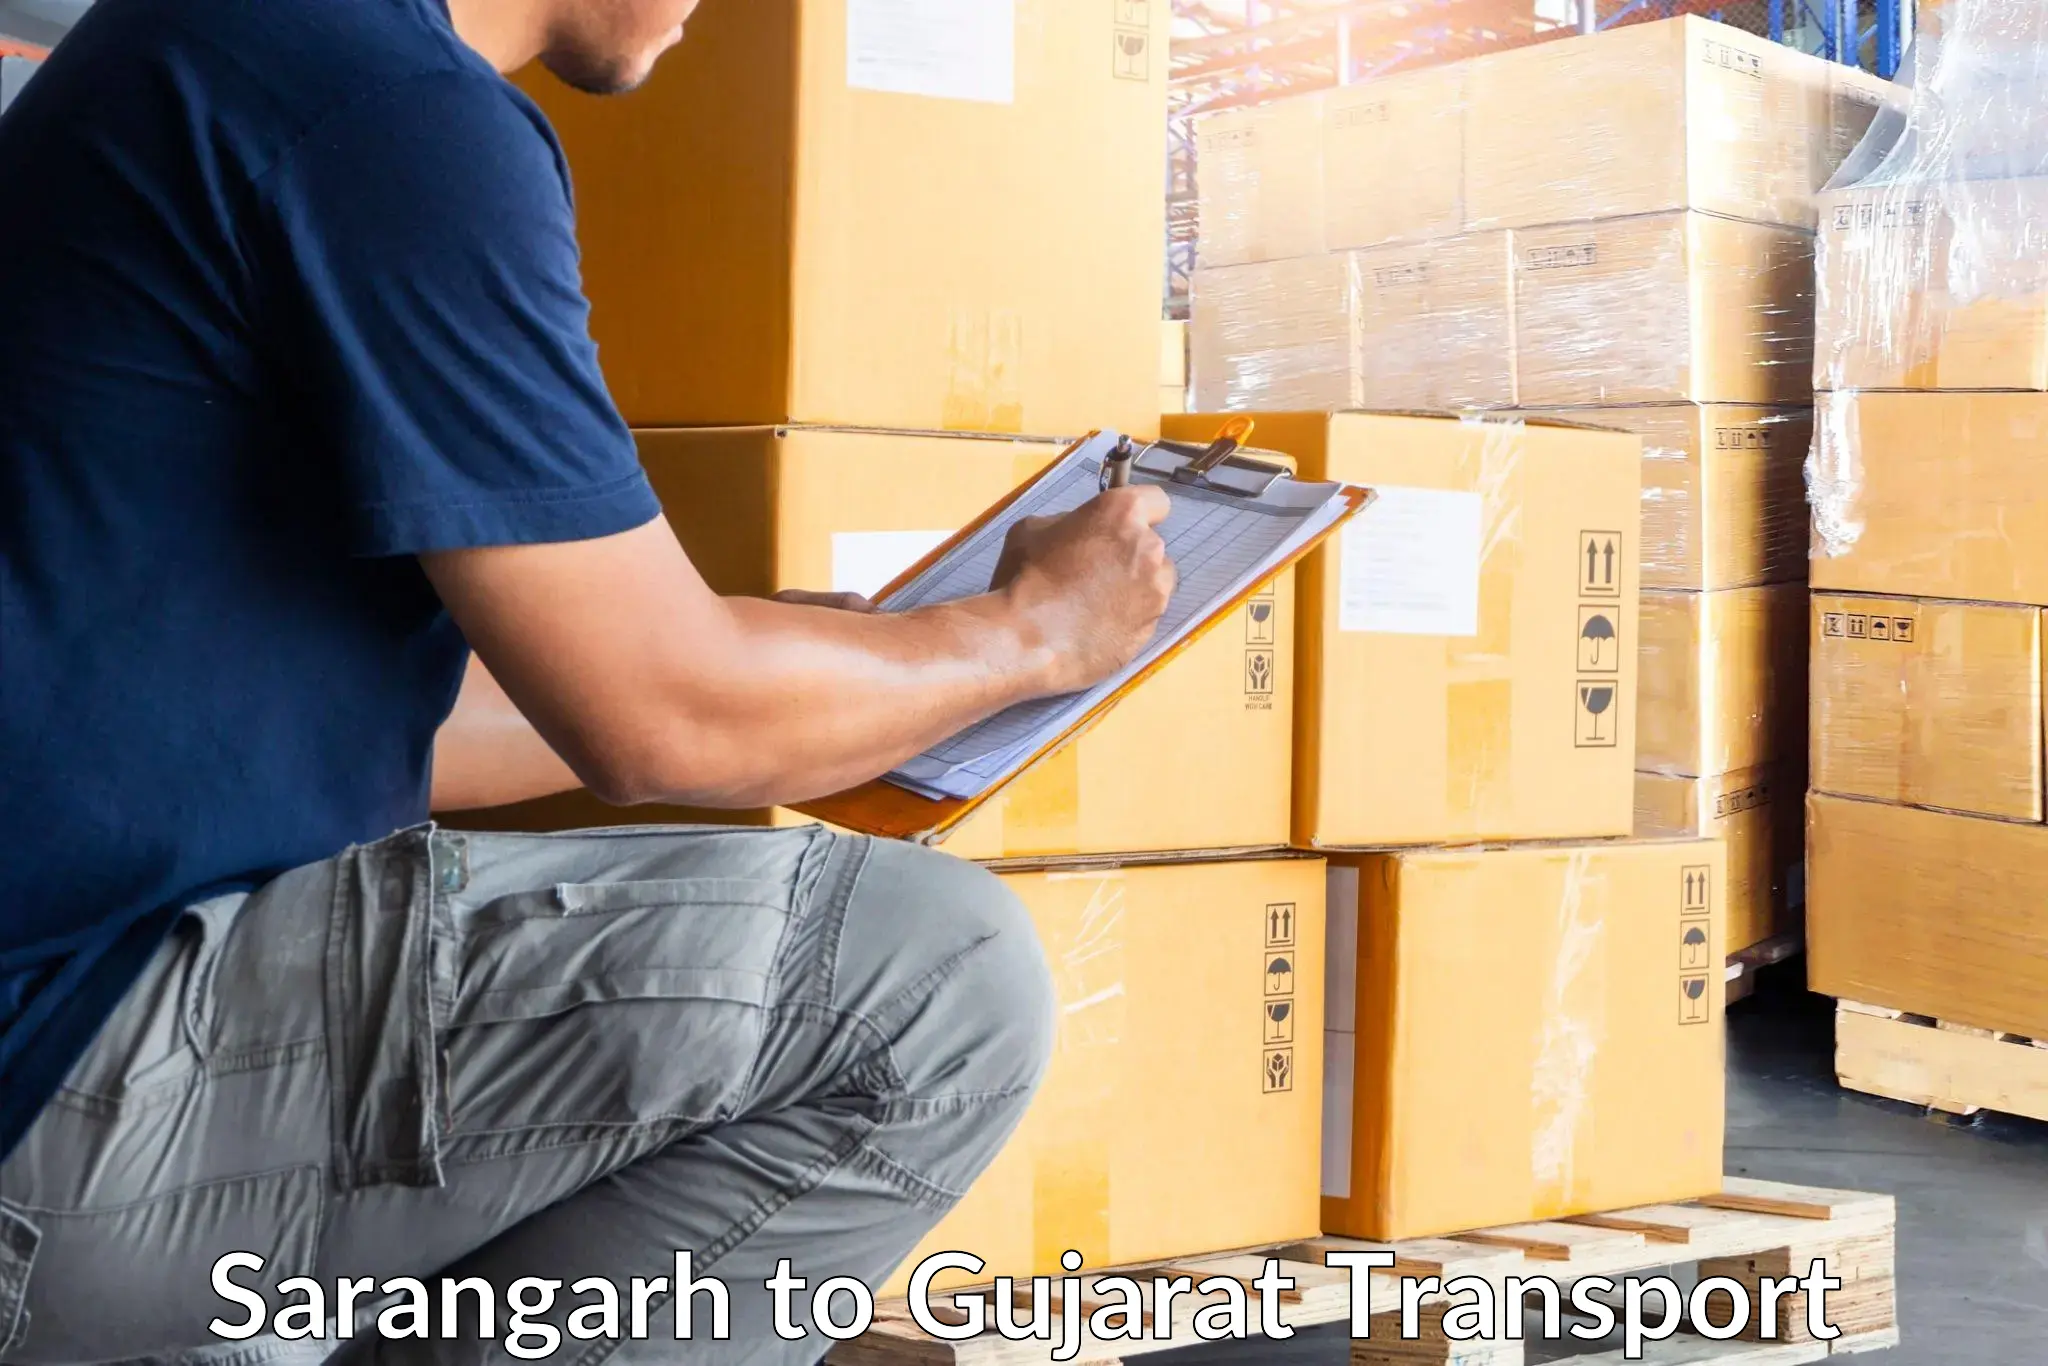 Delivery service Sarangarh to Dabhoi